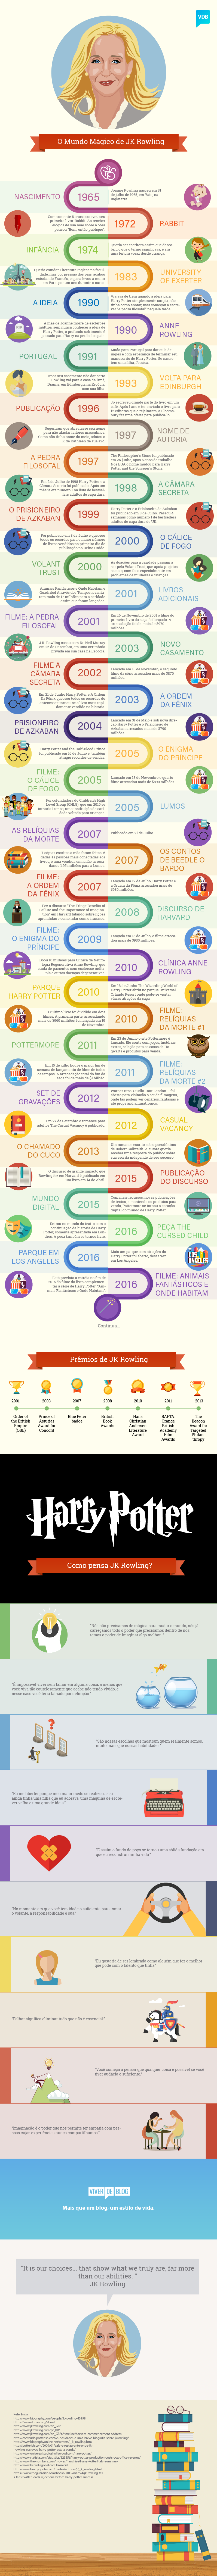 infografico-jk-rowling-5